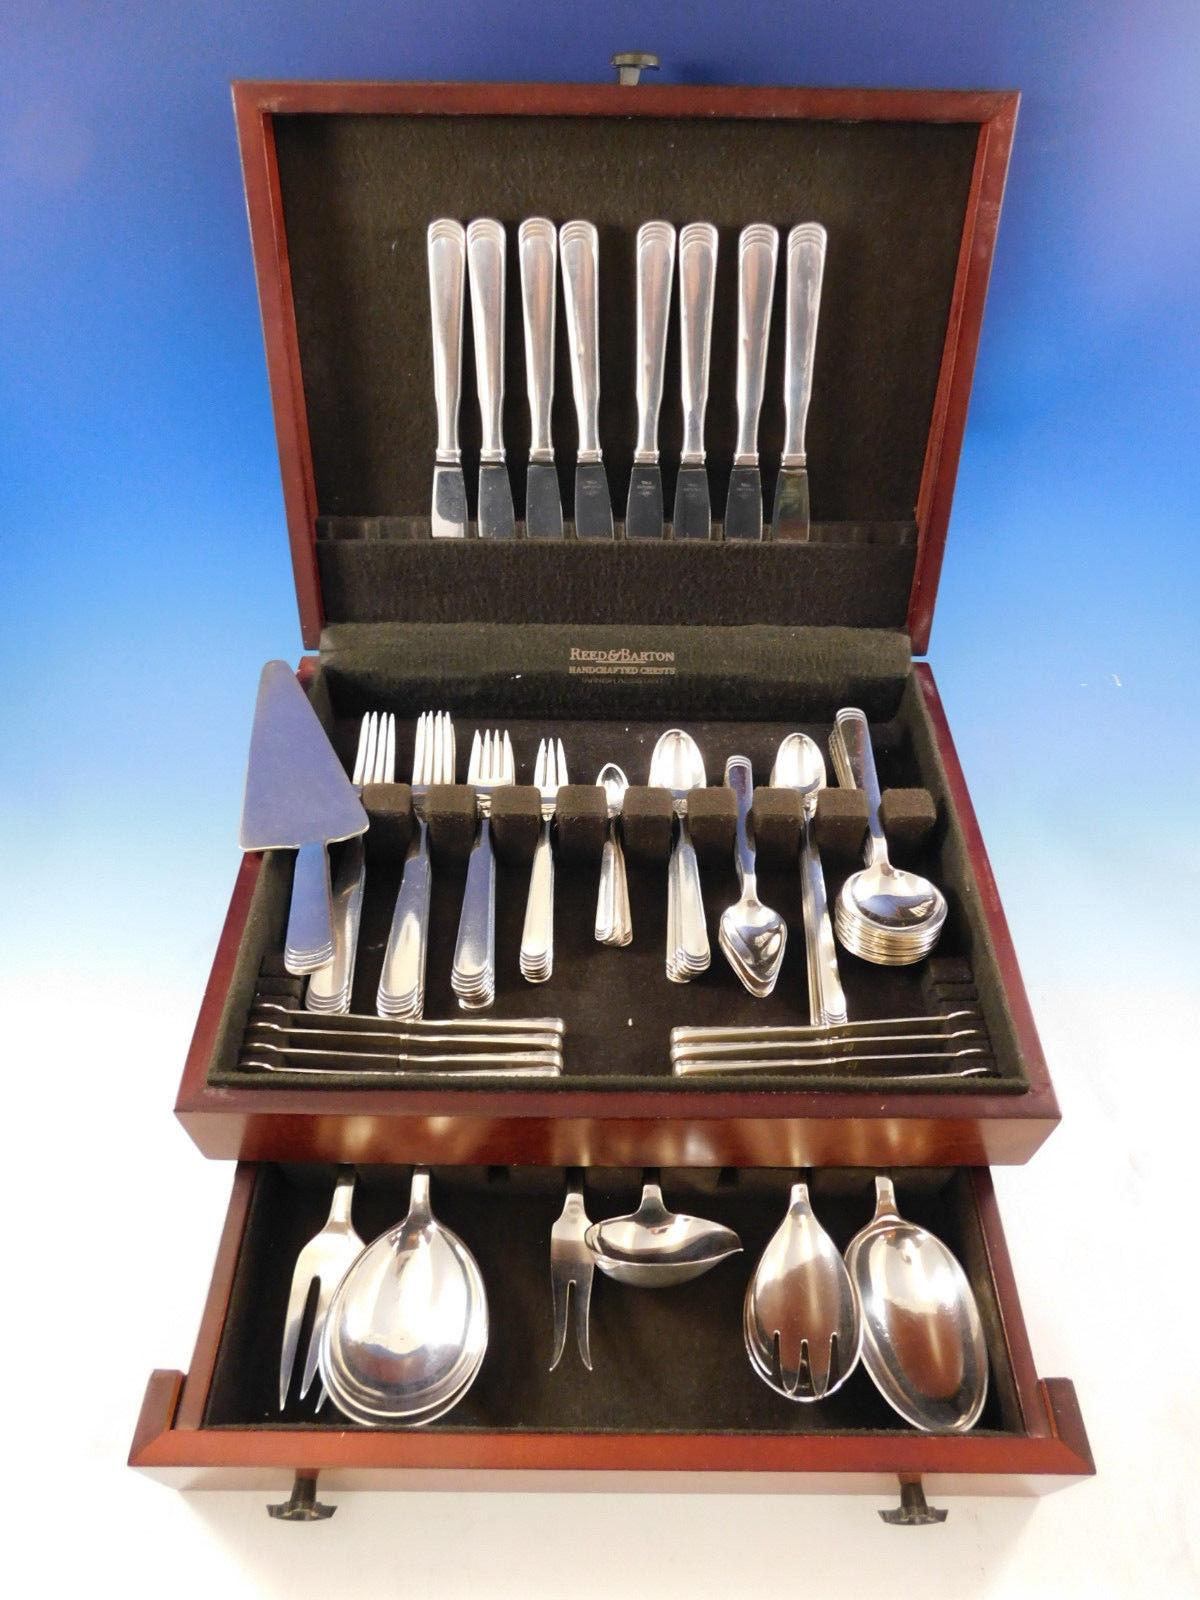 Ripple by Hans Hansen Danish sterling silver flatware set, 84 pieces. This Scandinavian Modern design set includes:

8 dinner knives, long handle, 8 7/8